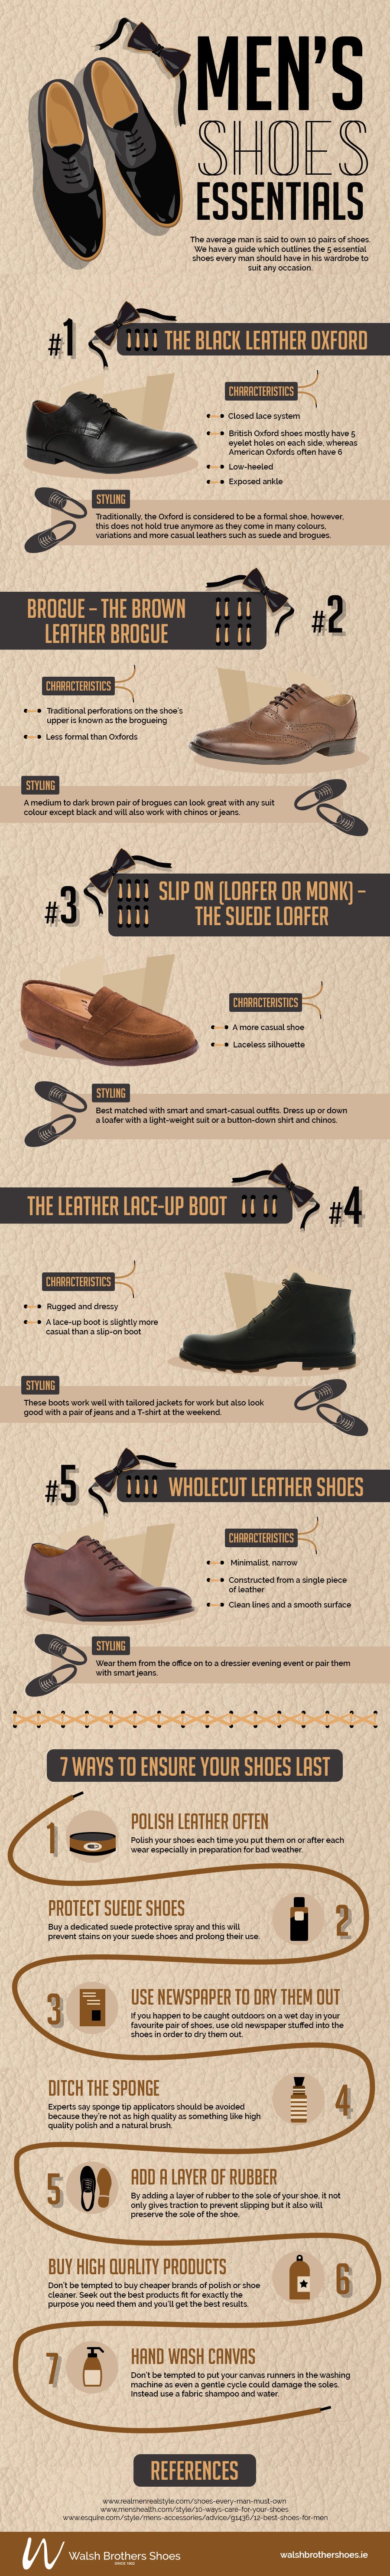 Men’s Shoes Essentials - Infographic